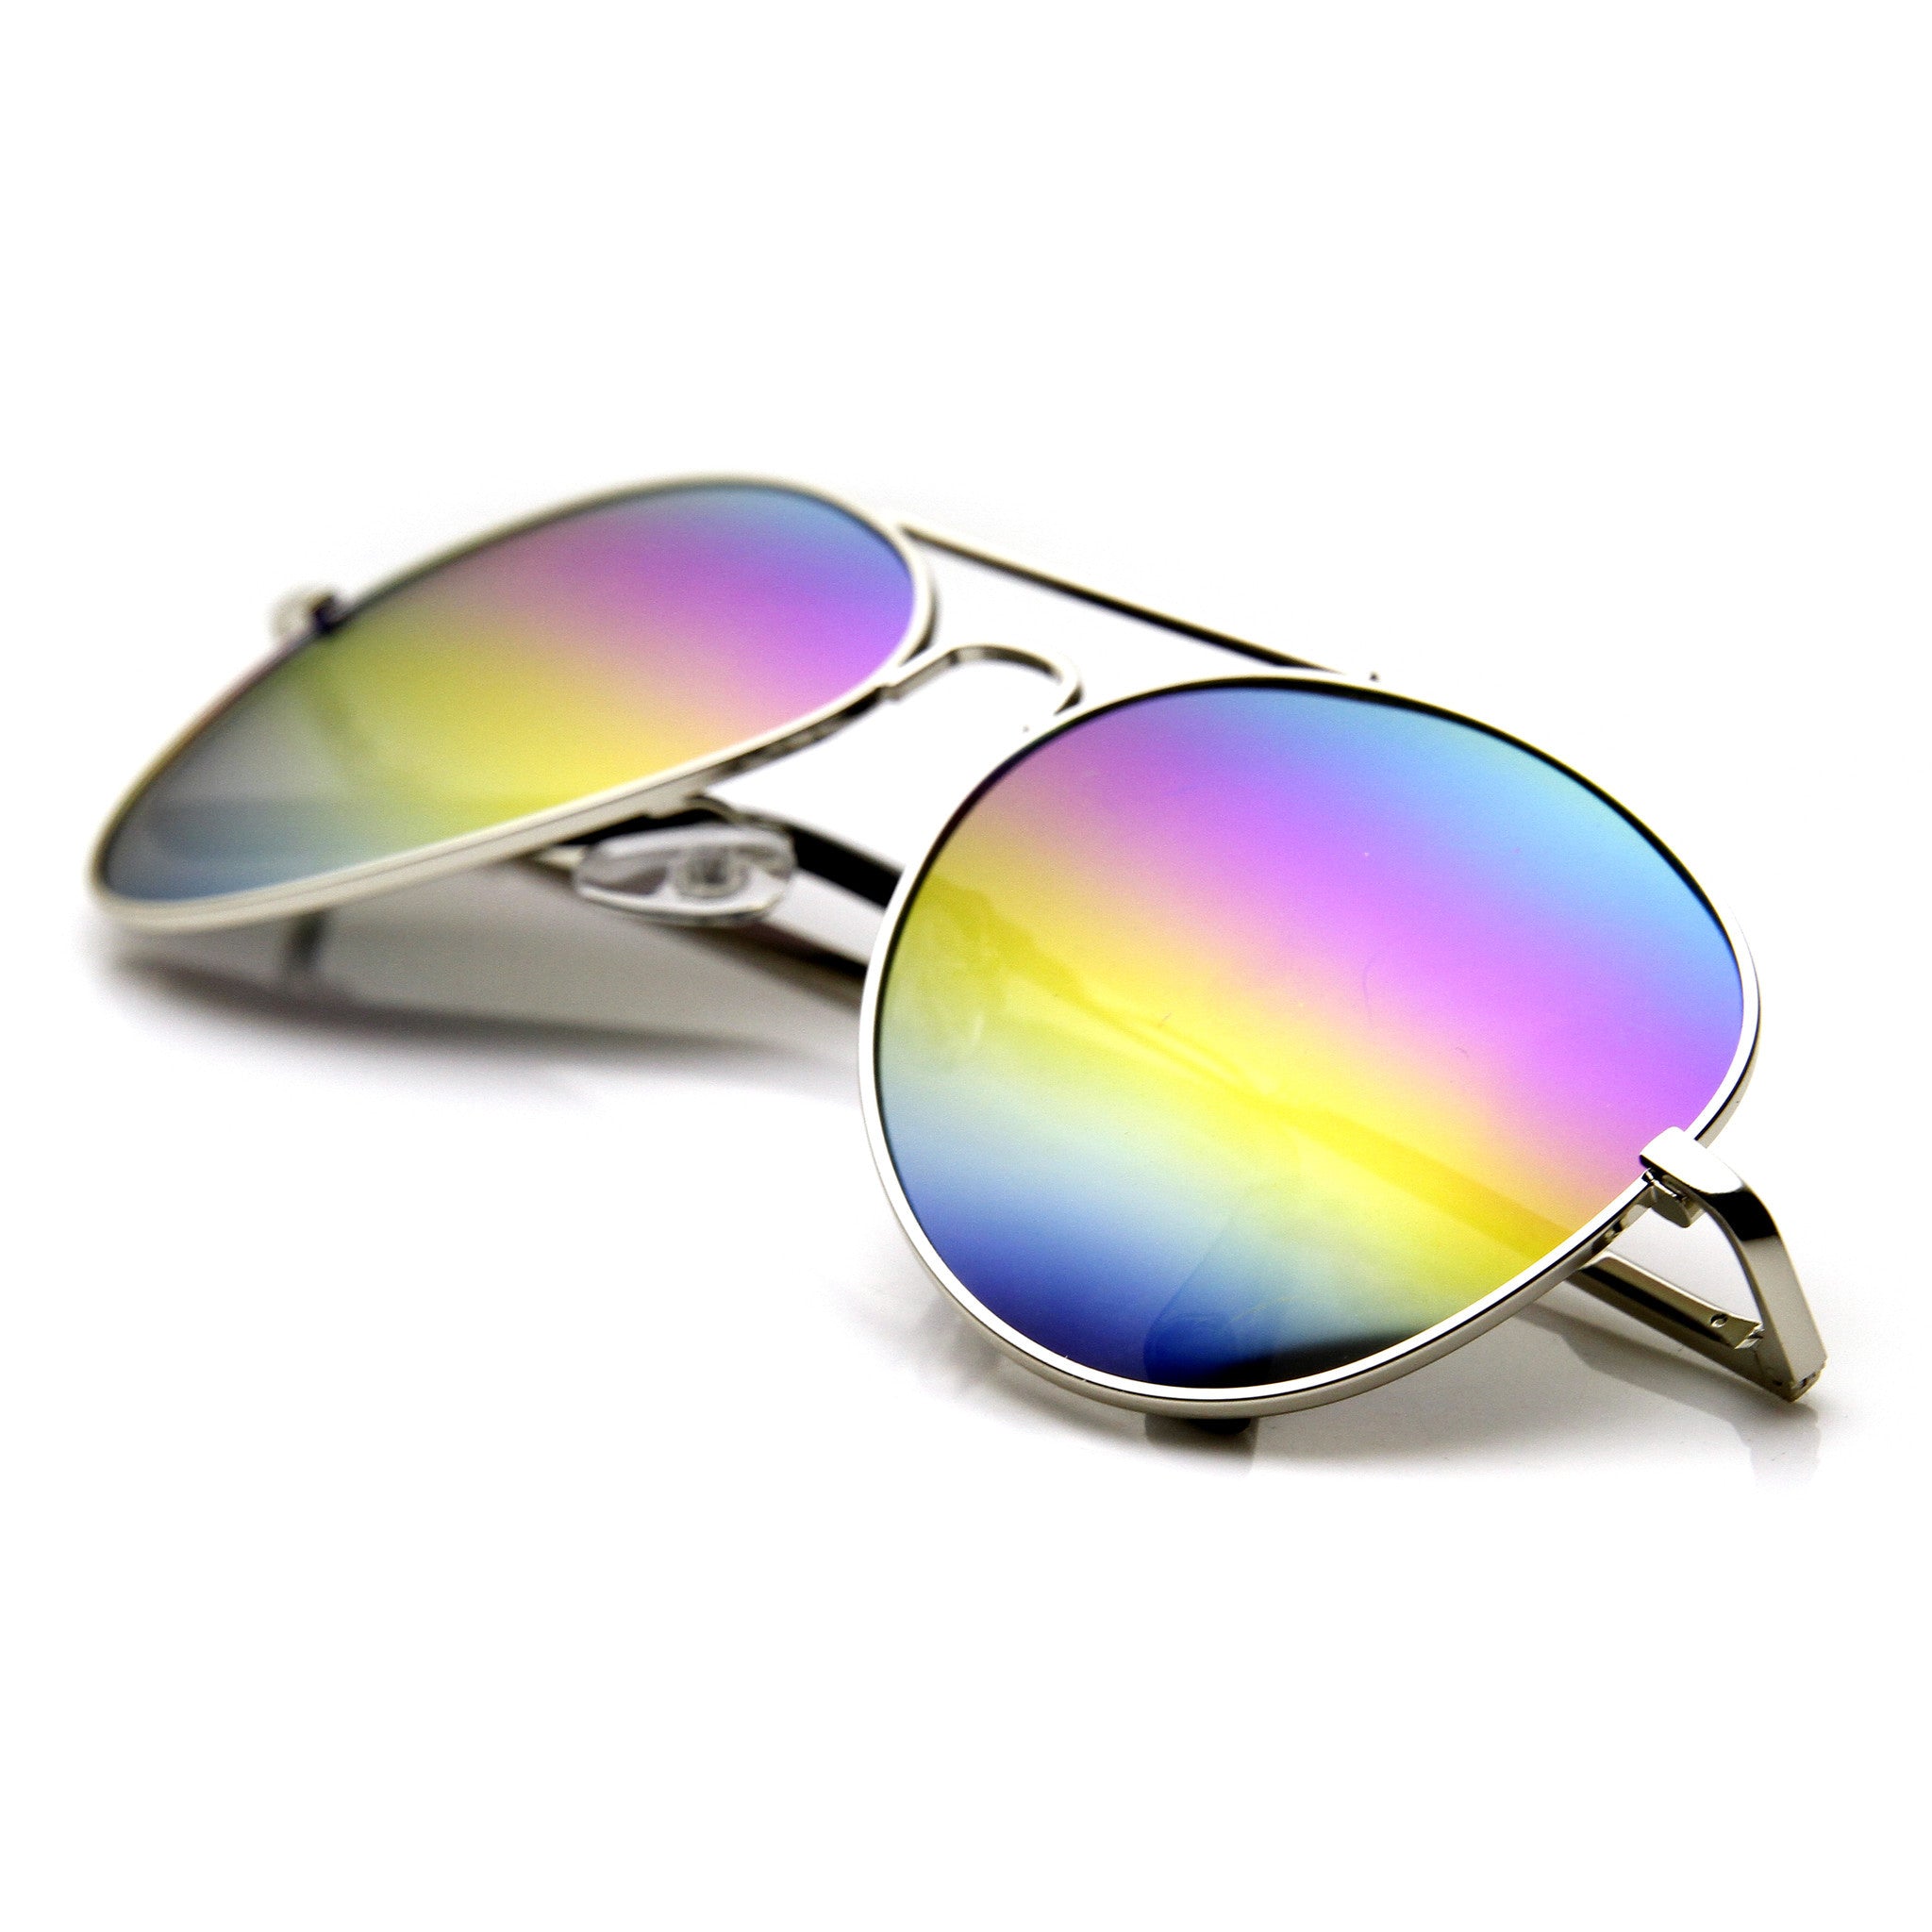 RAINBOW PETROL SUNGLASSES  Festival trends, Trending sunglasses